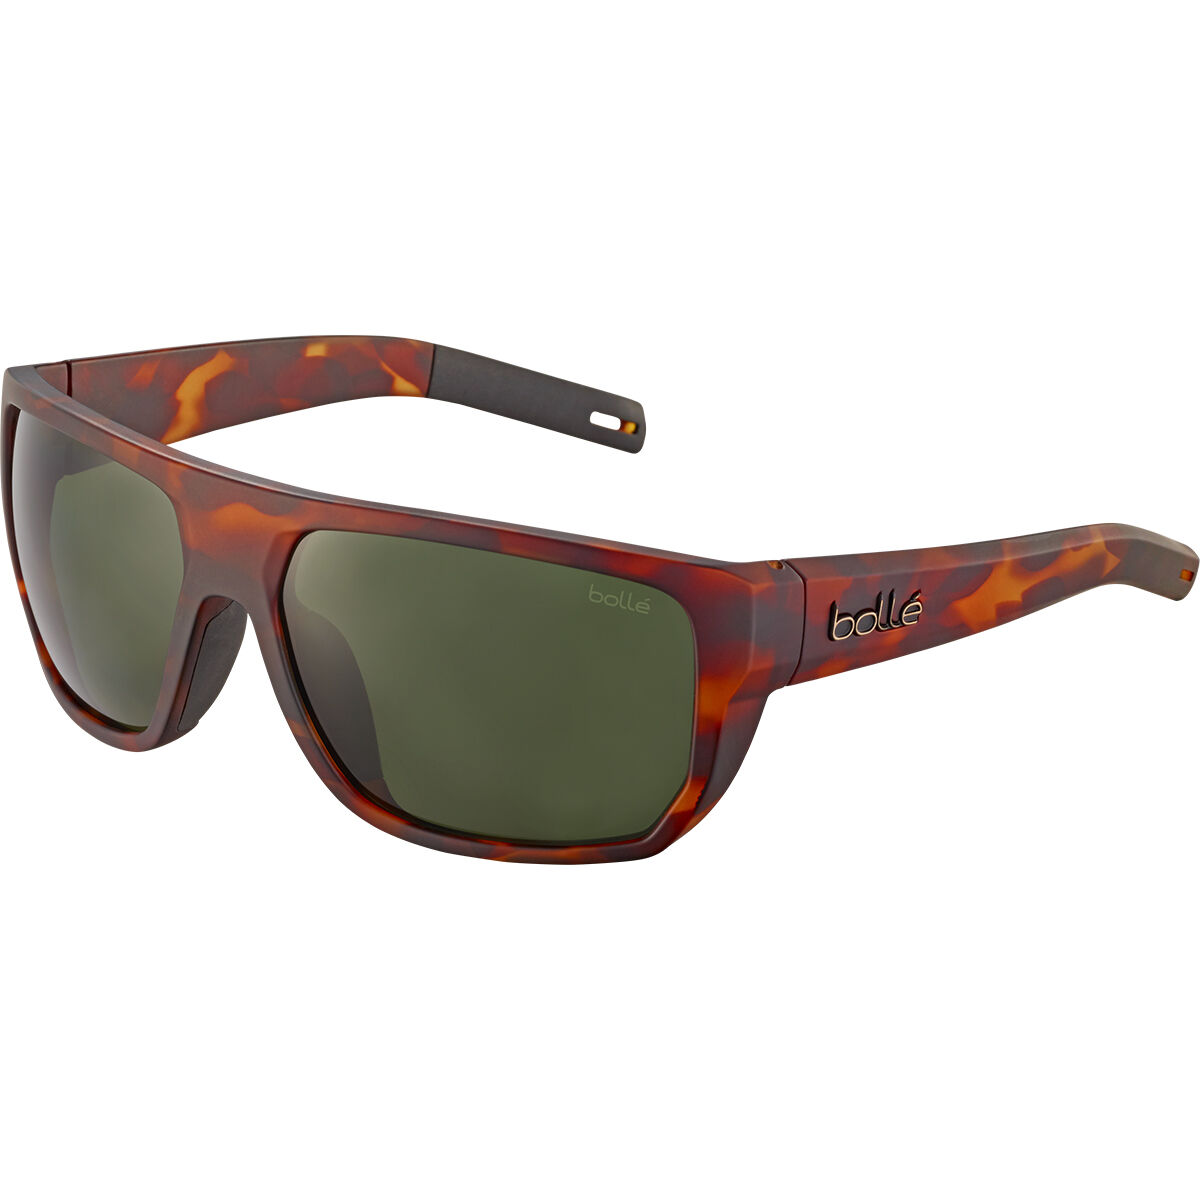 Bollé BRECKEN FLOATABLE Water Sports Sunglasses - HD Polarized